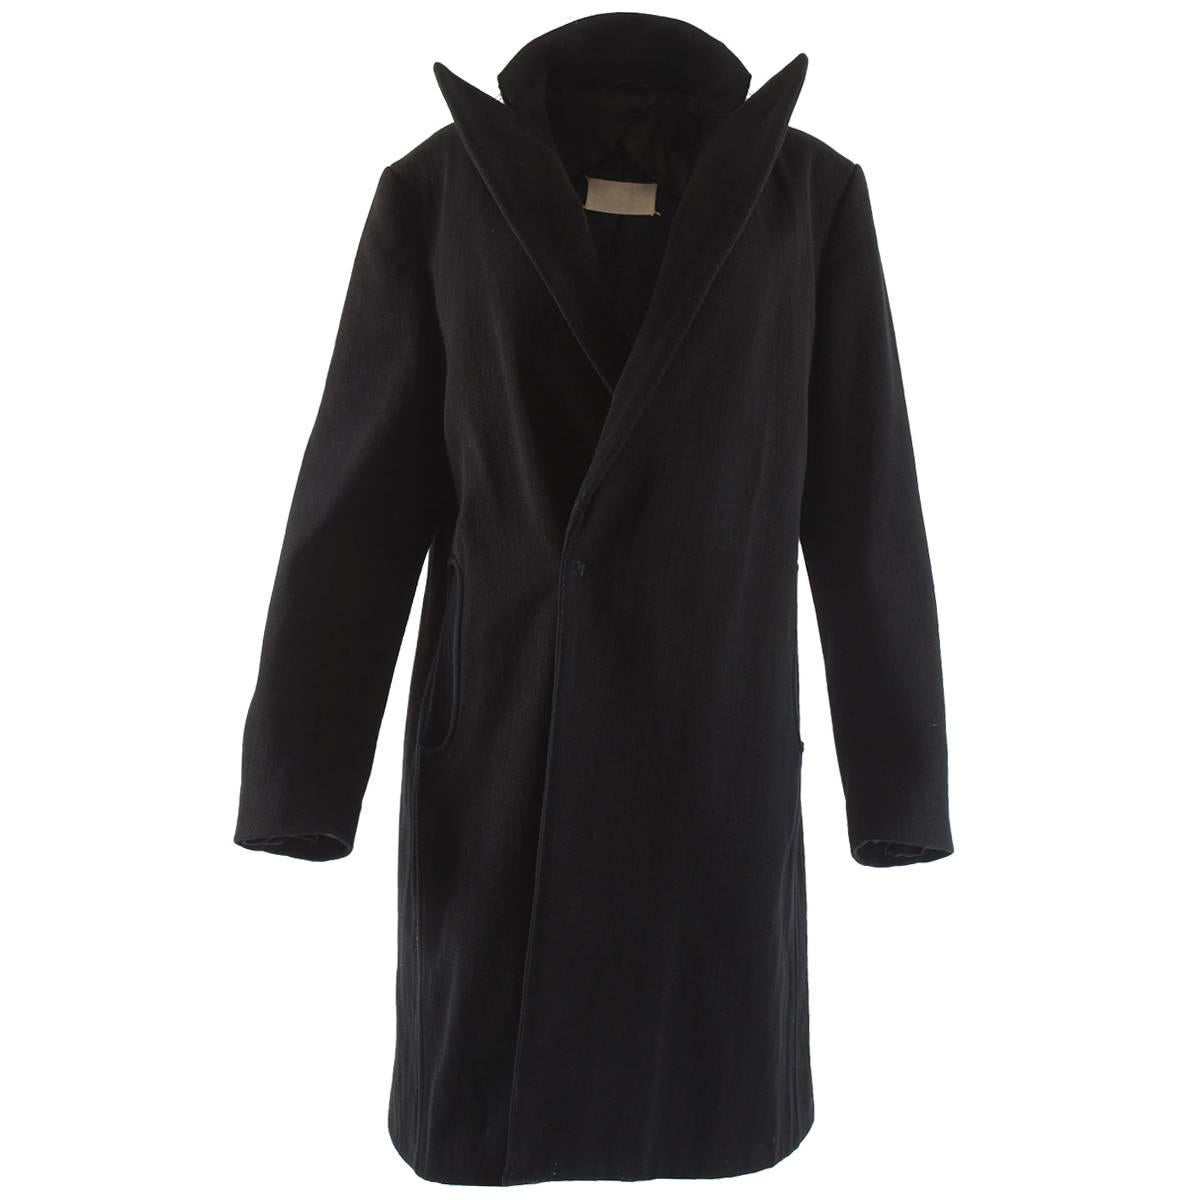 Maison Martin Margiela Autumn-Winter 1996 oversized coat with exaggerated collar